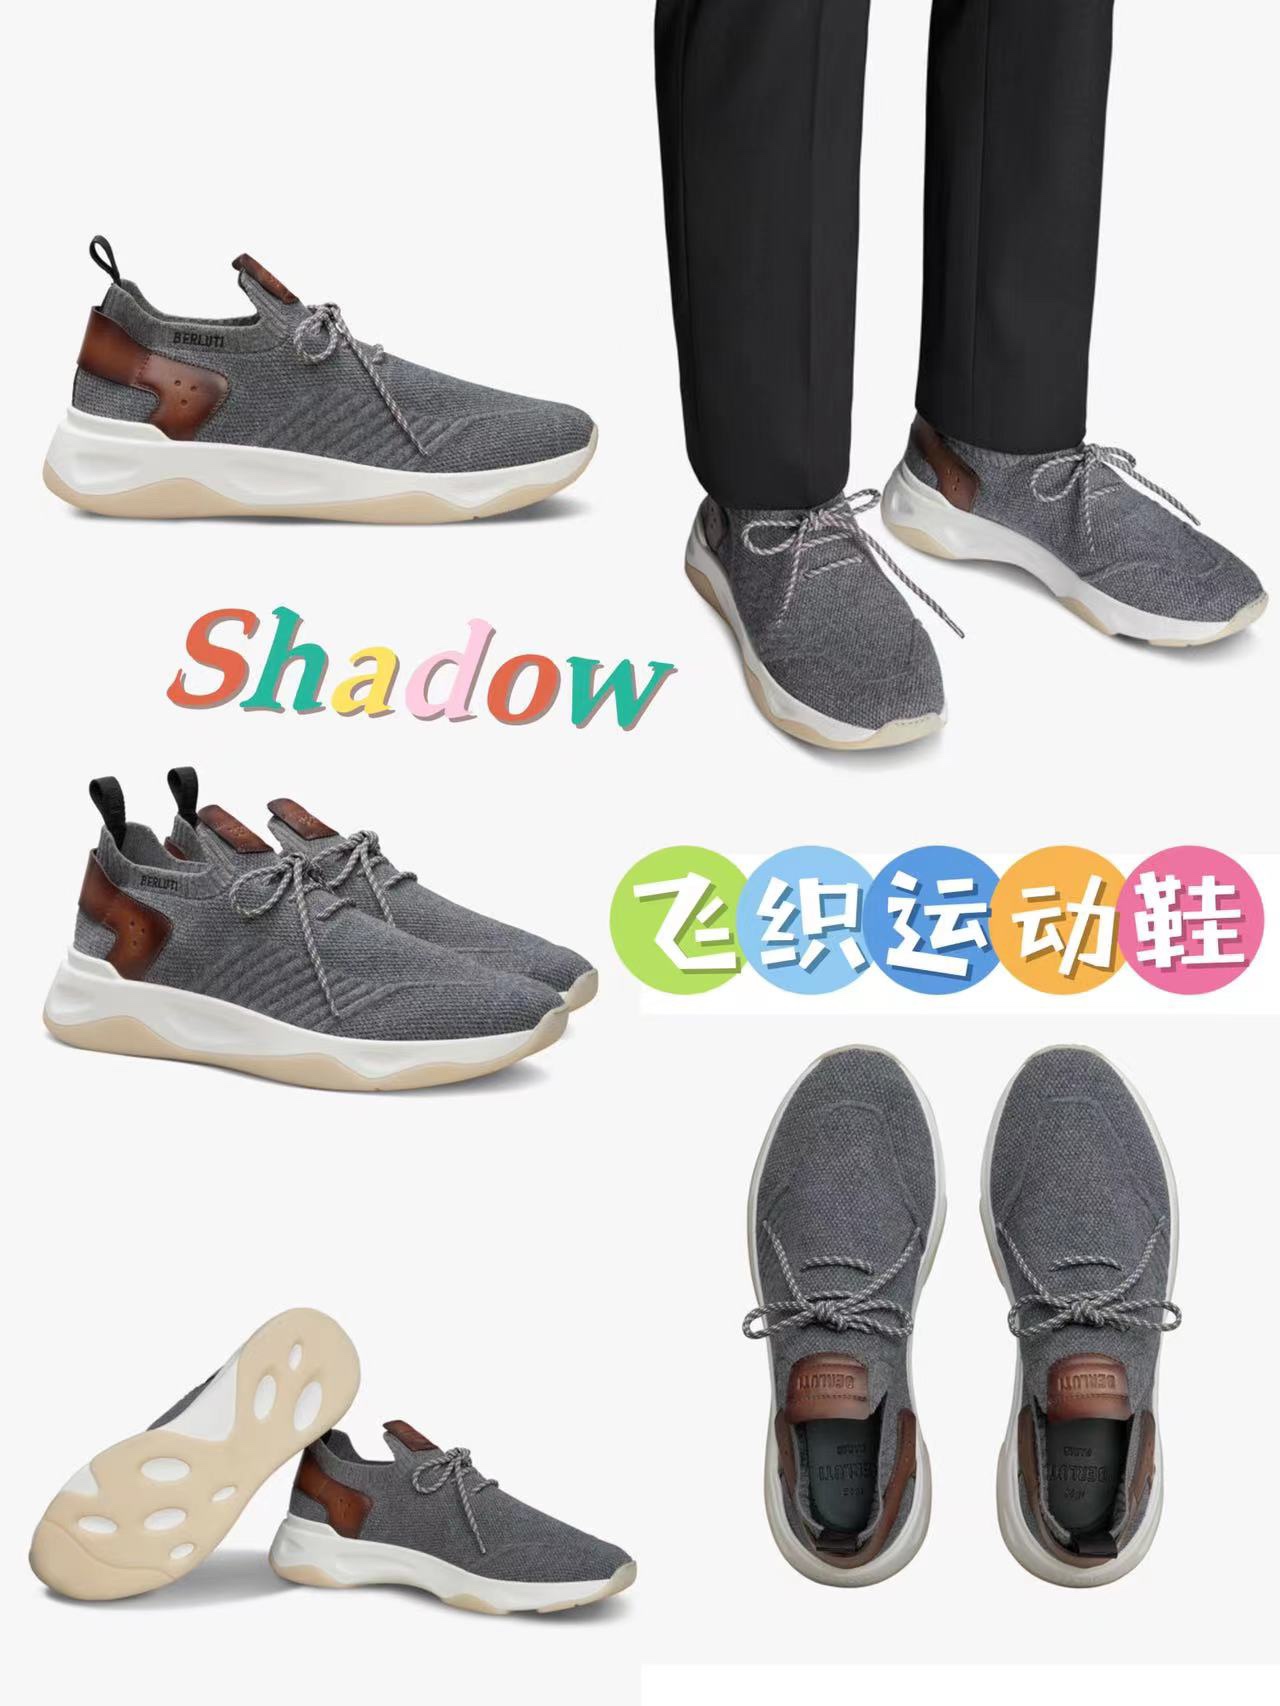 Berlut* 布魯提新品 Shadow飛織運動鞋